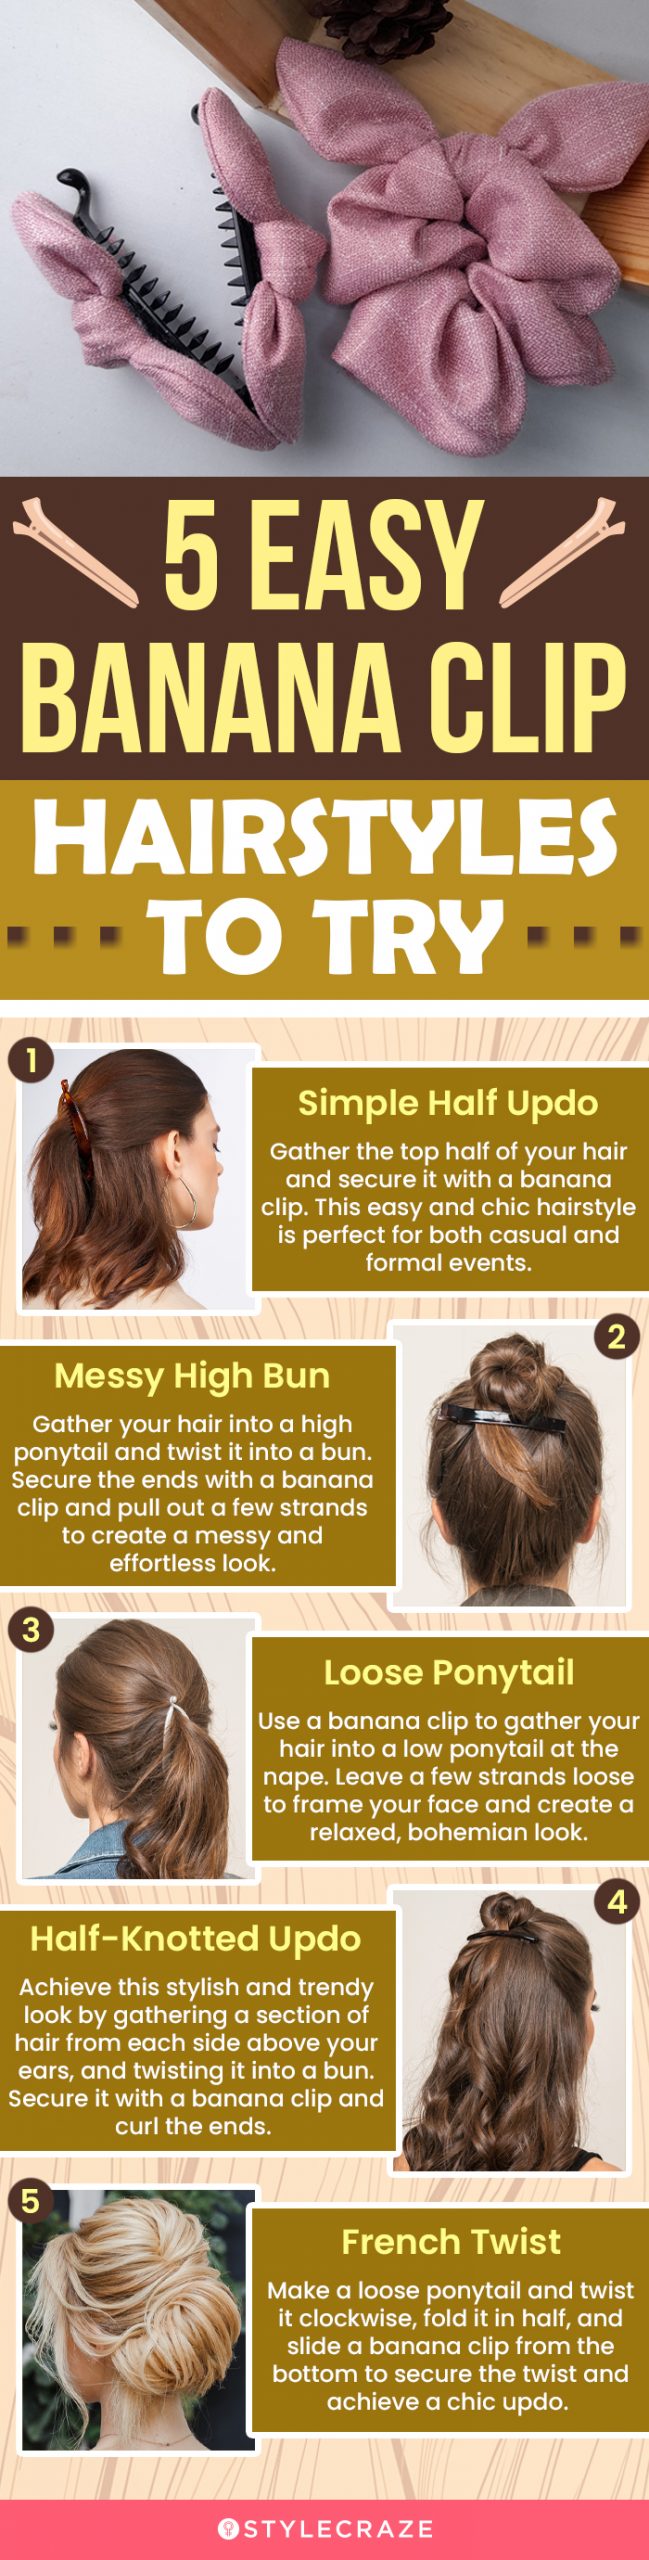 10 Banana Clips for Naturally Curly Hair ideas  banana clip hairstyles banana  clip clip hairstyles